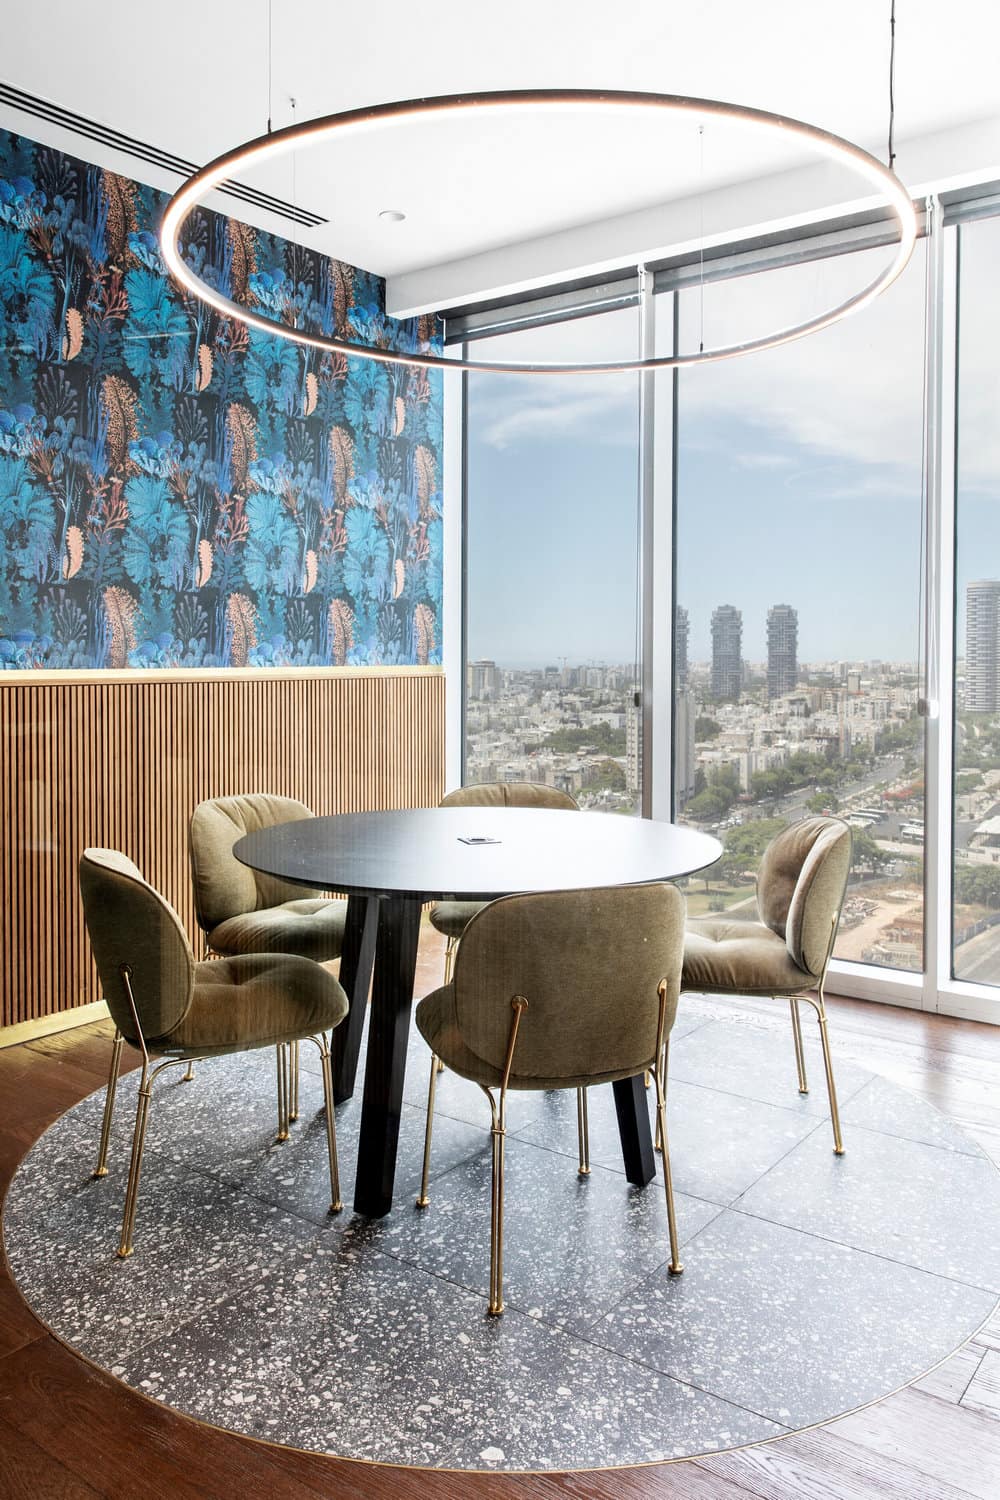 Ishlav Office in Tel Aviv’s Central Business District